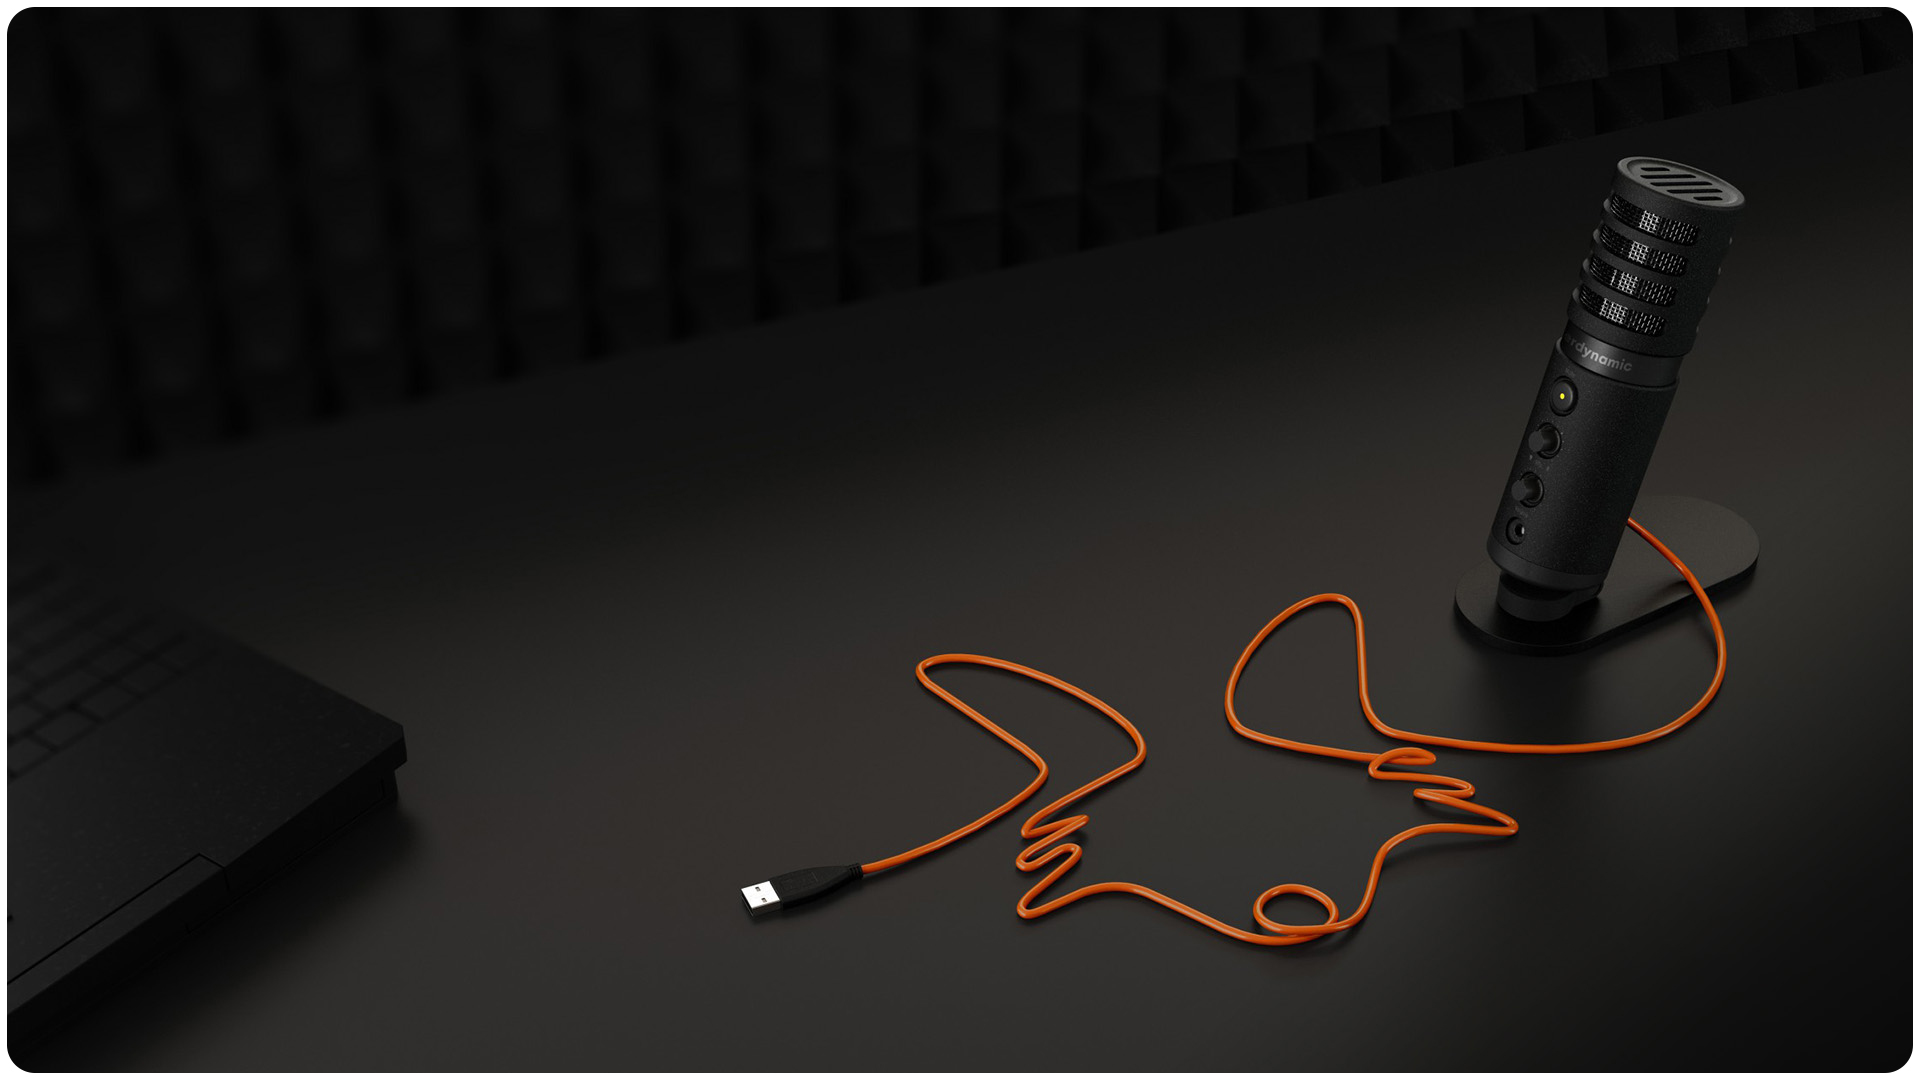 Beyerdynamic Fox USB Studio Microphone